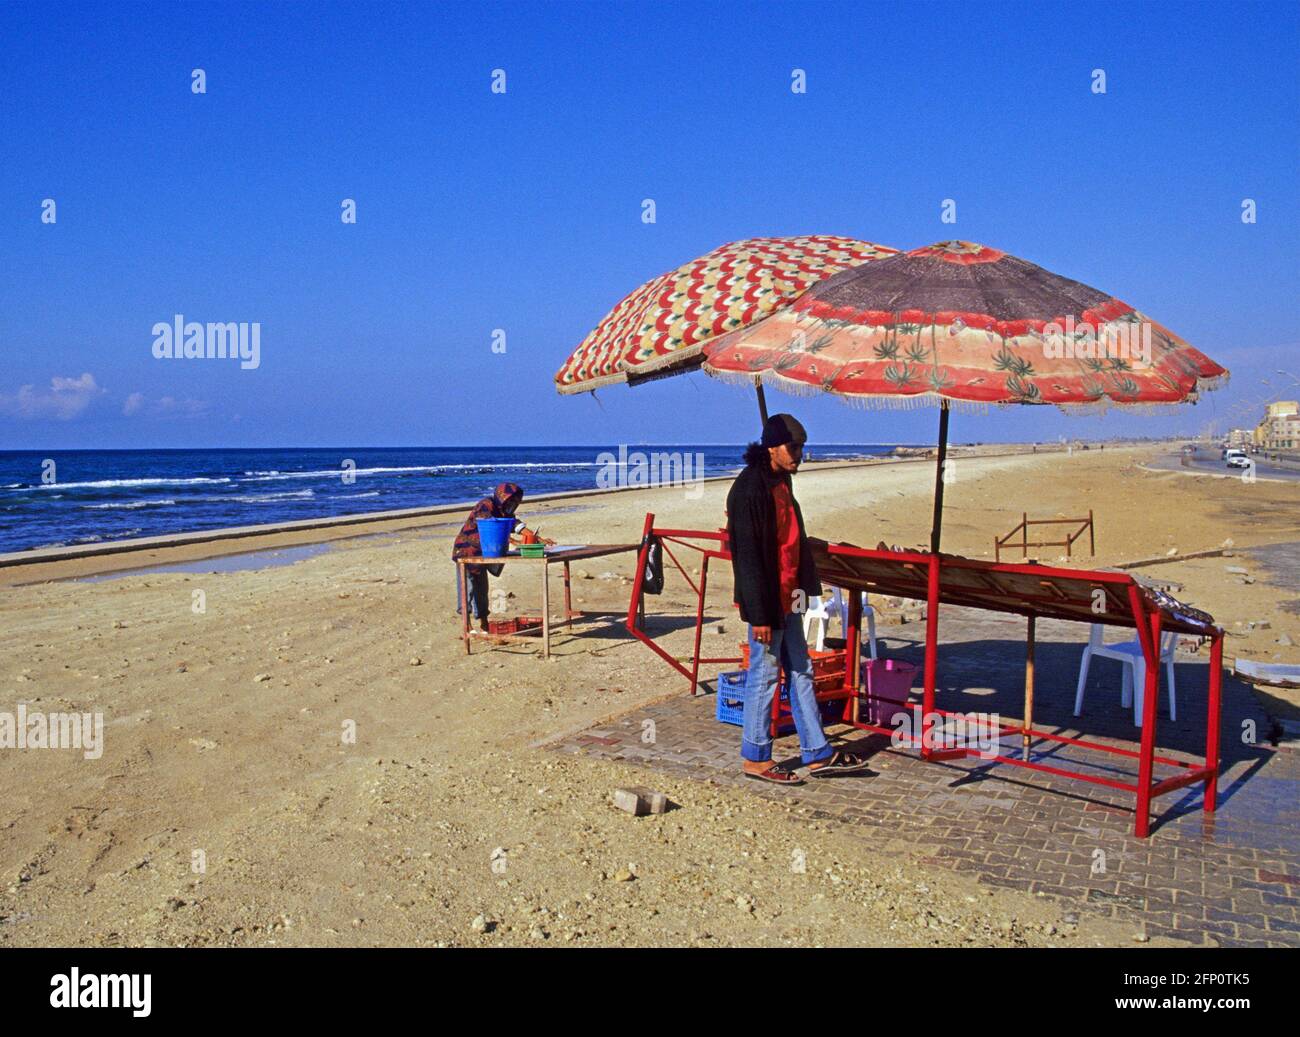 Fishmonger sells fish on the beach, Benghazi, Libya Stock Photo